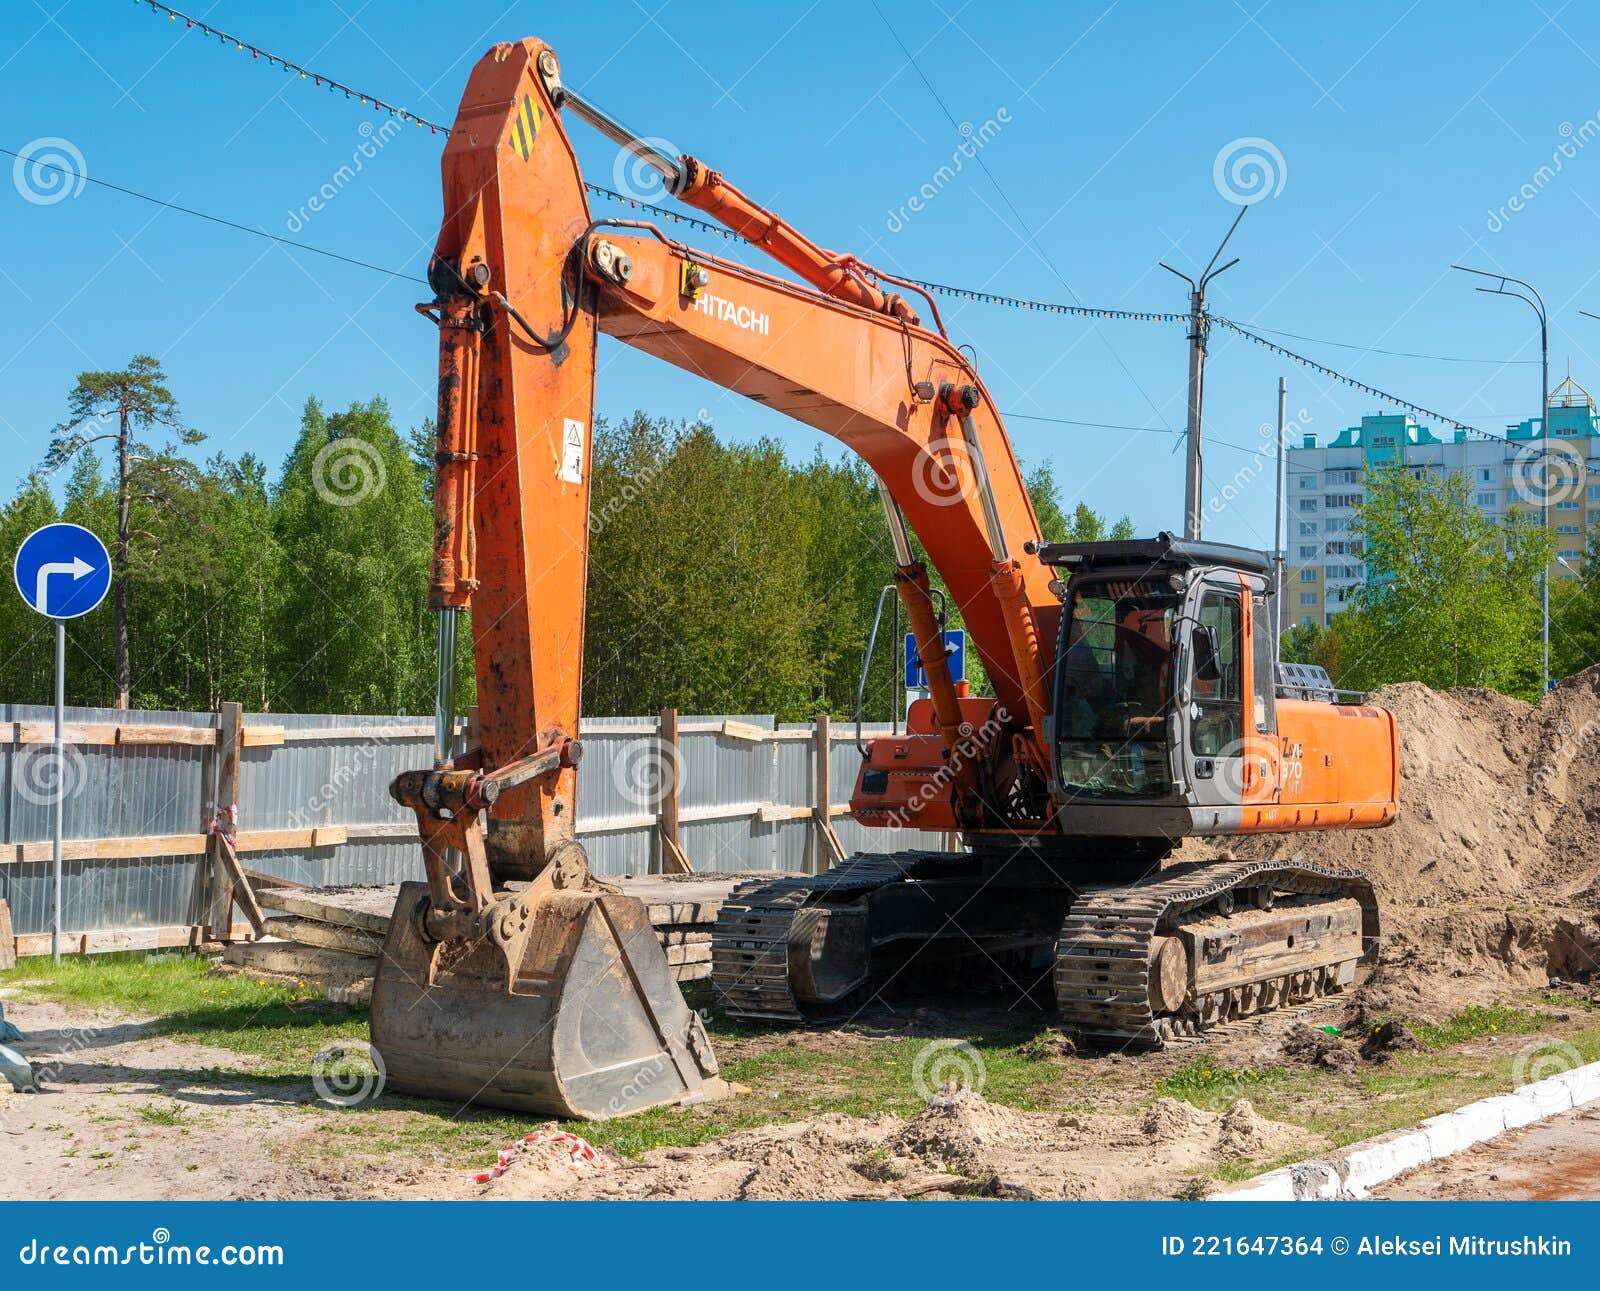 Noyabrsk, Russia - June 5, 2021: Hitachi`s Orange Excavator Stands at a